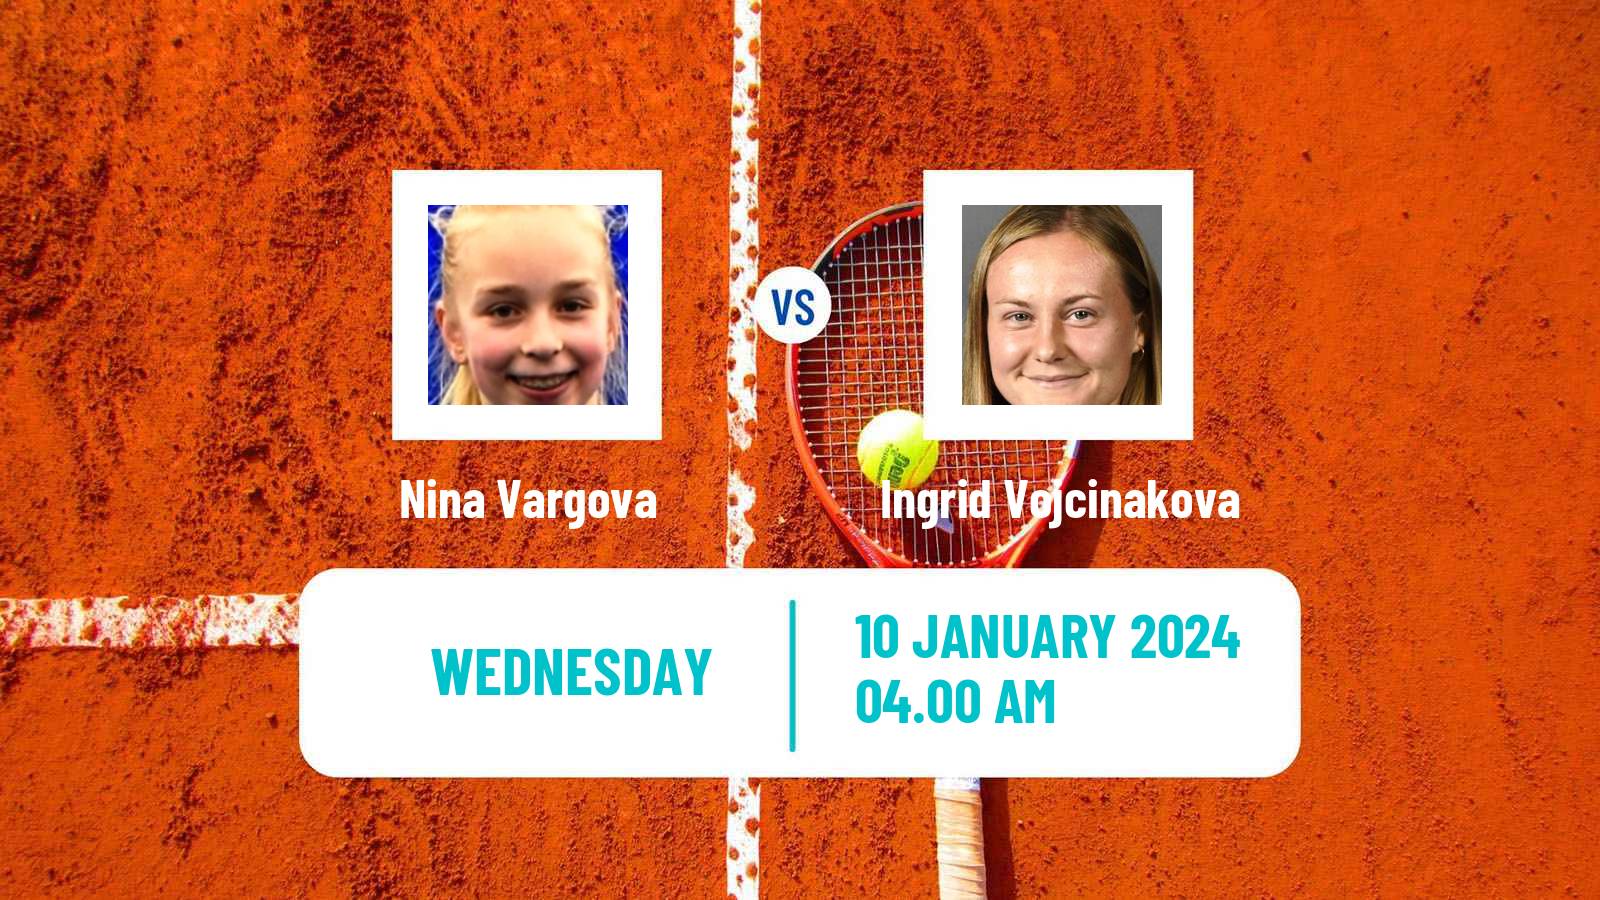 Tennis ITF W15 Monastir 2 Women Nina Vargova - Ingrid Vojcinakova